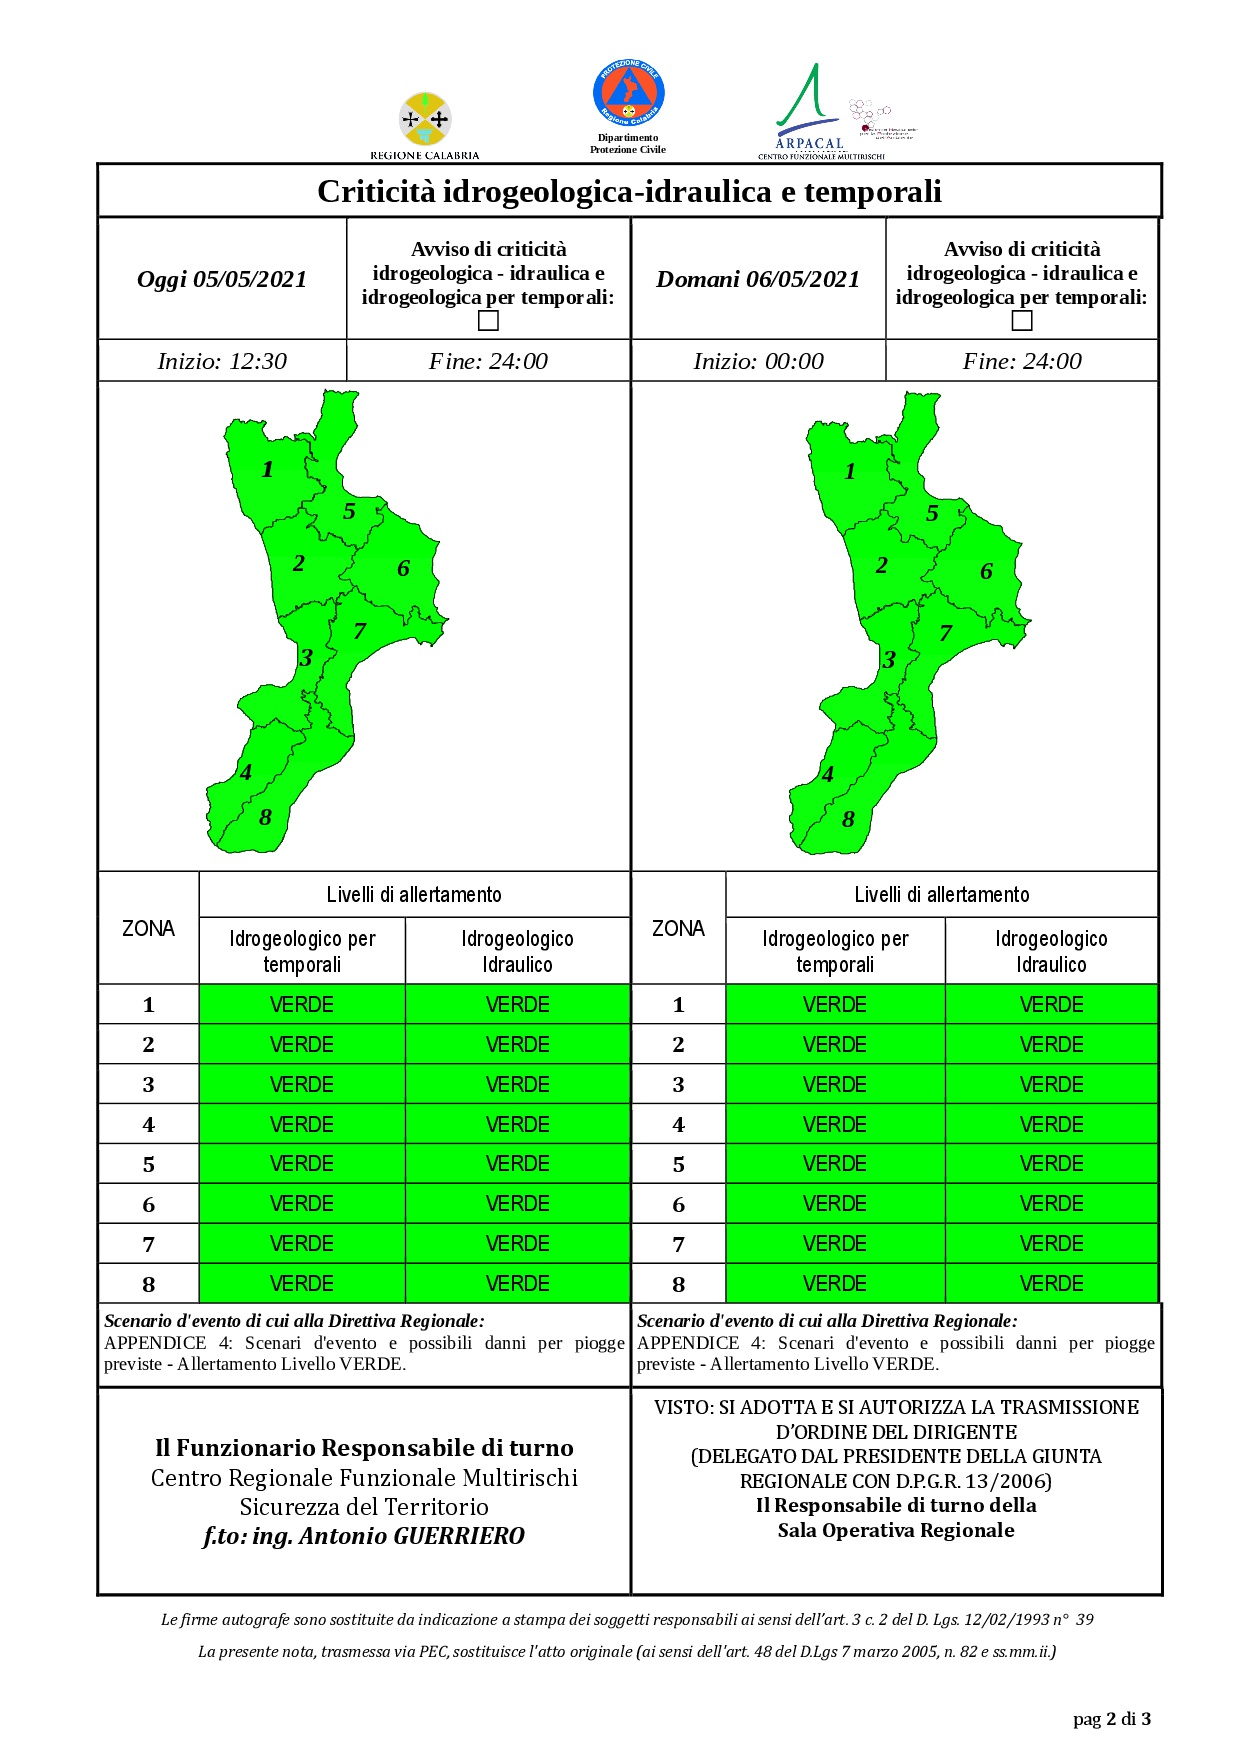 Criticità idrogeologica-idraulica e temporali in Calabria 05-05-2021